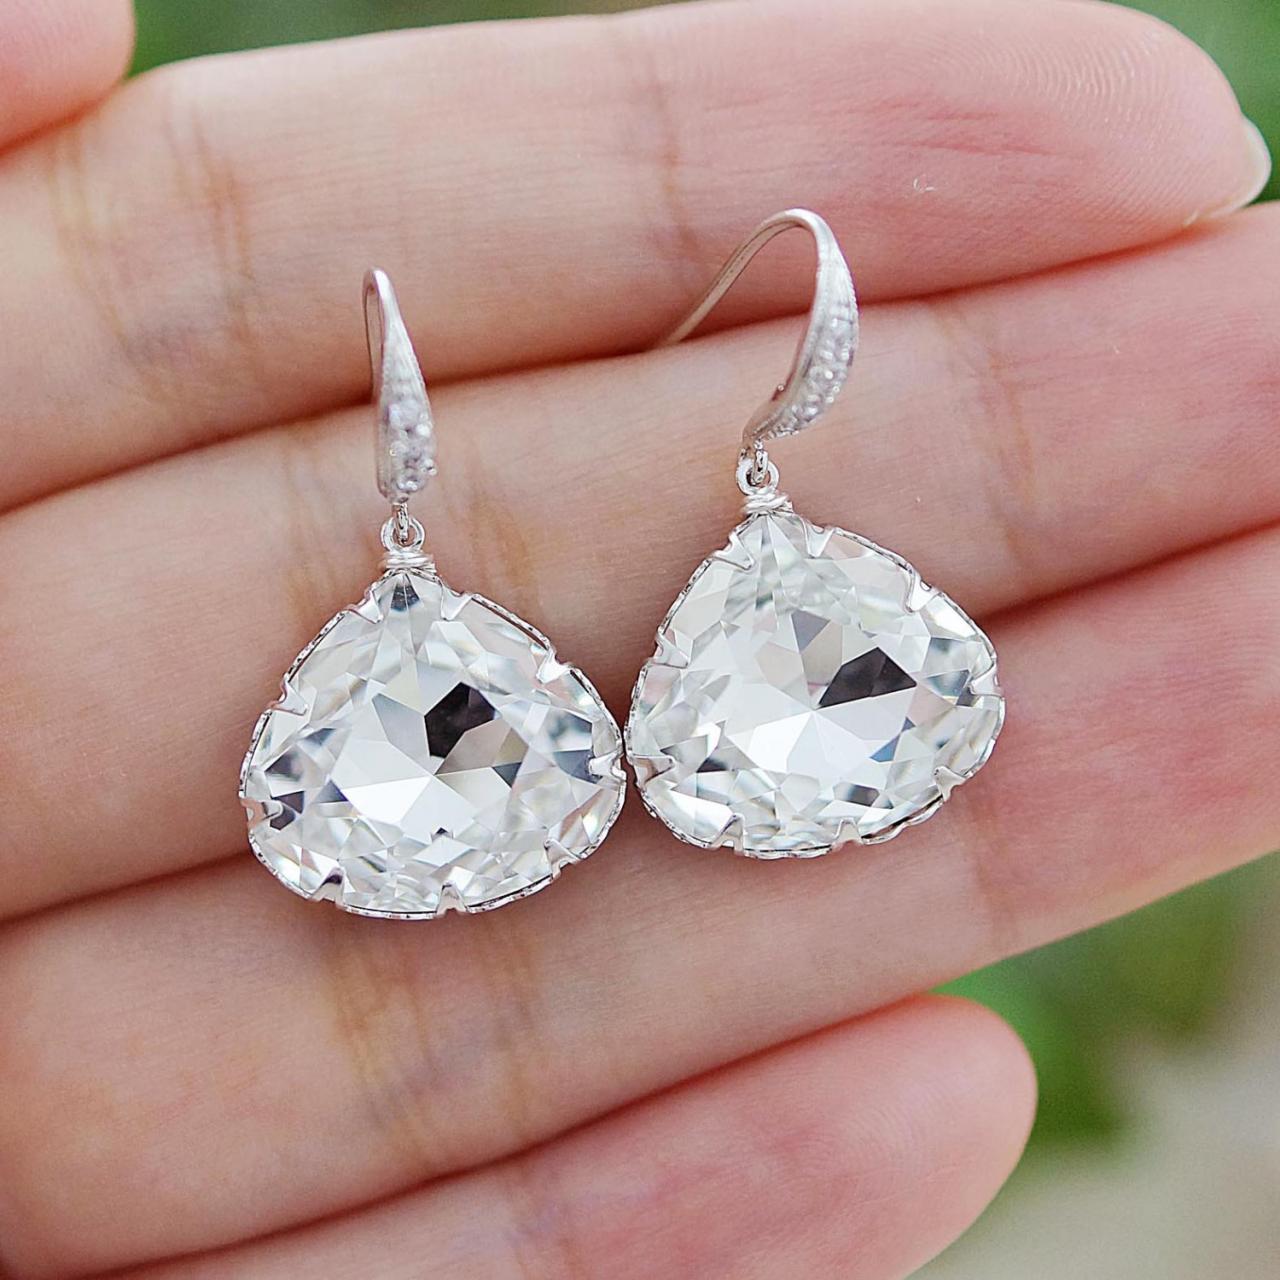 Wedding Jewelry Bridal Earrings Bridesmaid Gifts Bridesmaid Earrings Dangle Earrings Clear White Swarovski Crystal Triangle Drop Earrings